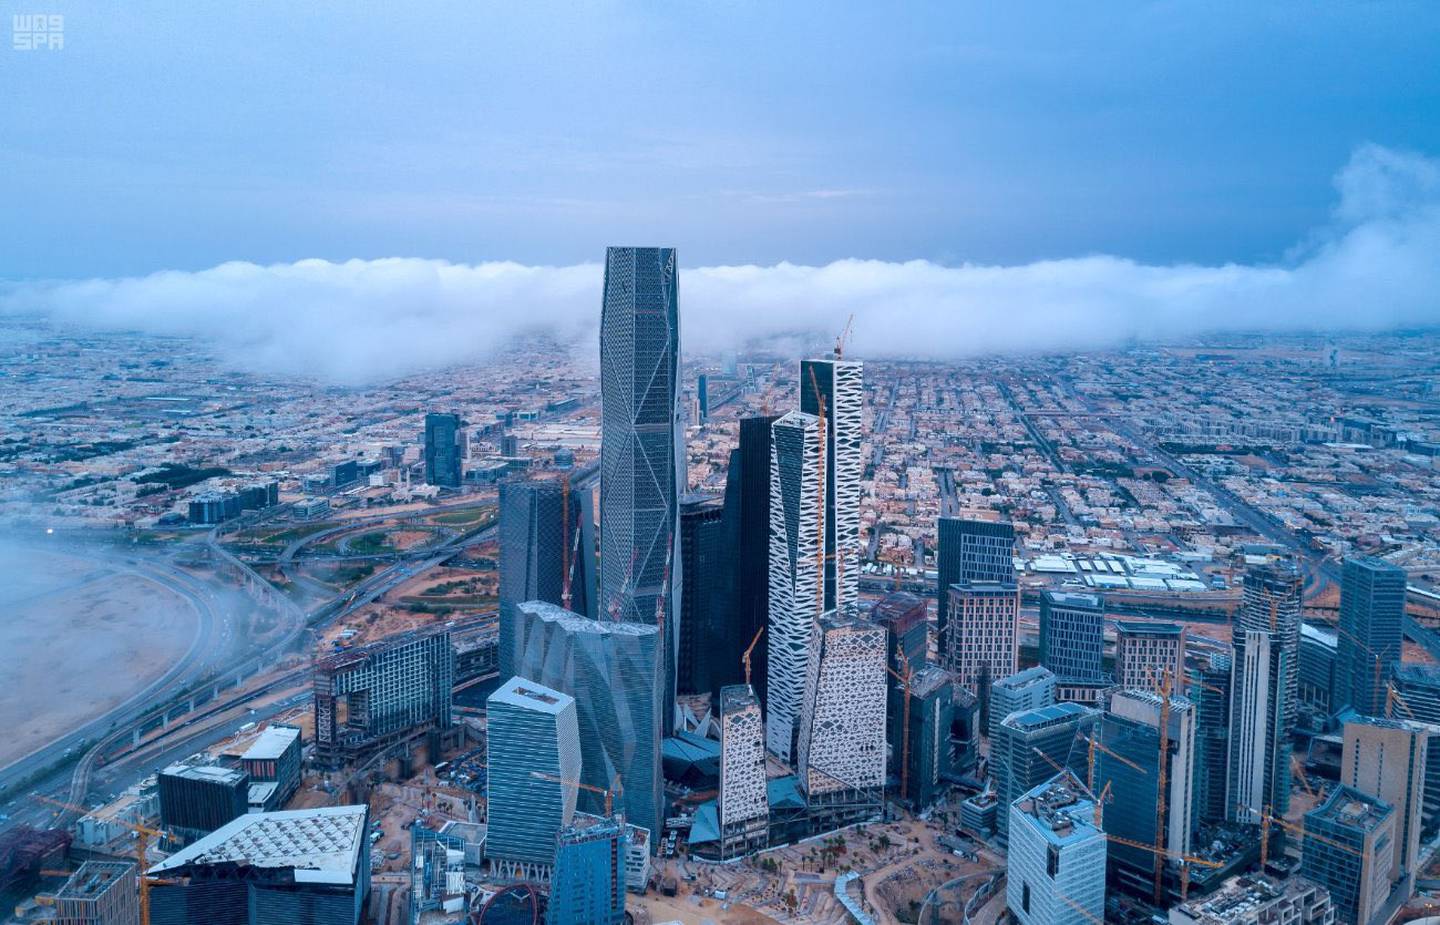 Saudi authorities hope cloud seeding will improve rainfall rates in the kingdom. Photo: Saudi Projects